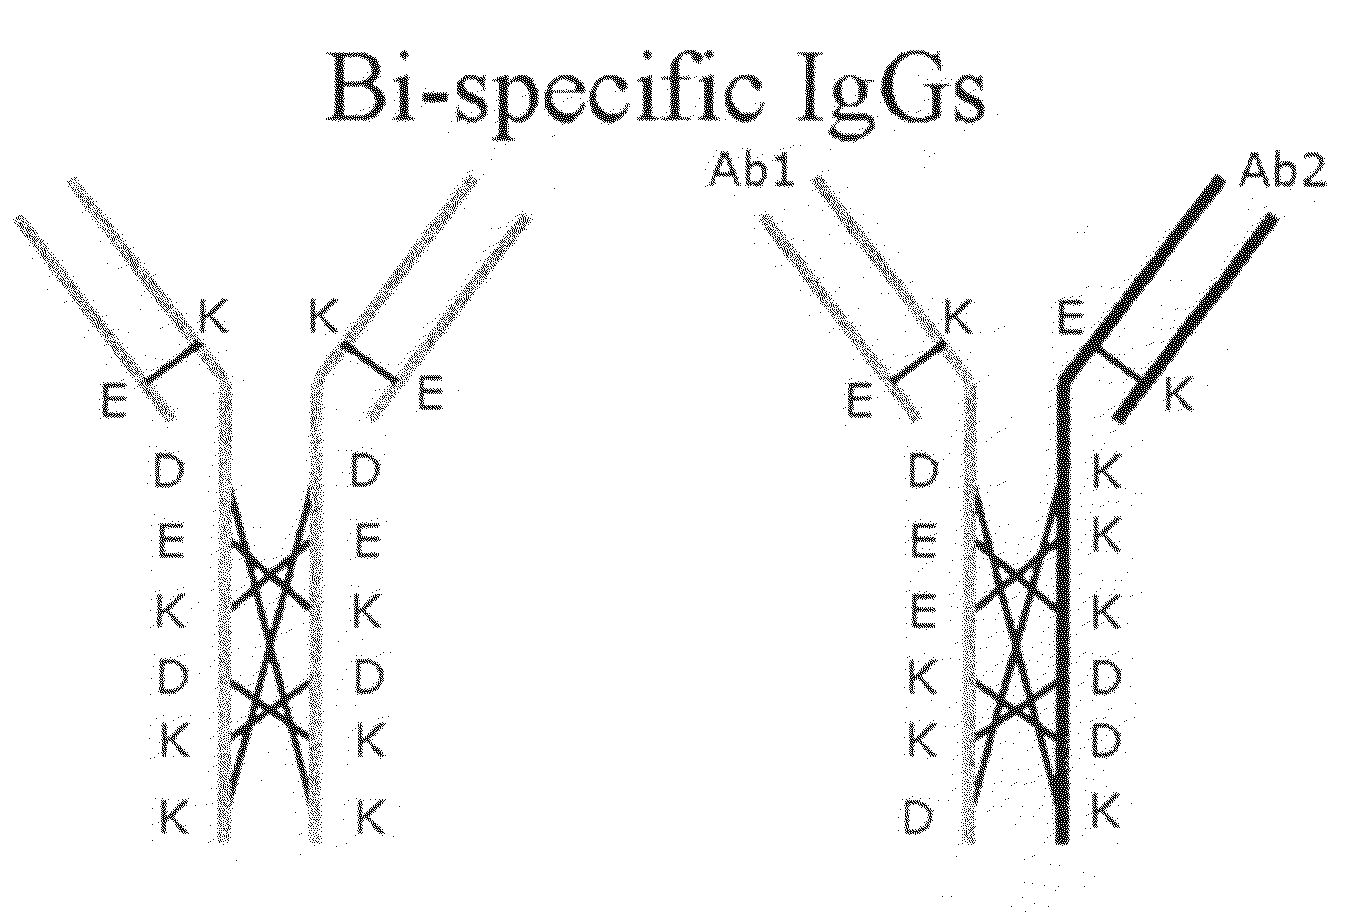 Production of Bispecific Antibodies